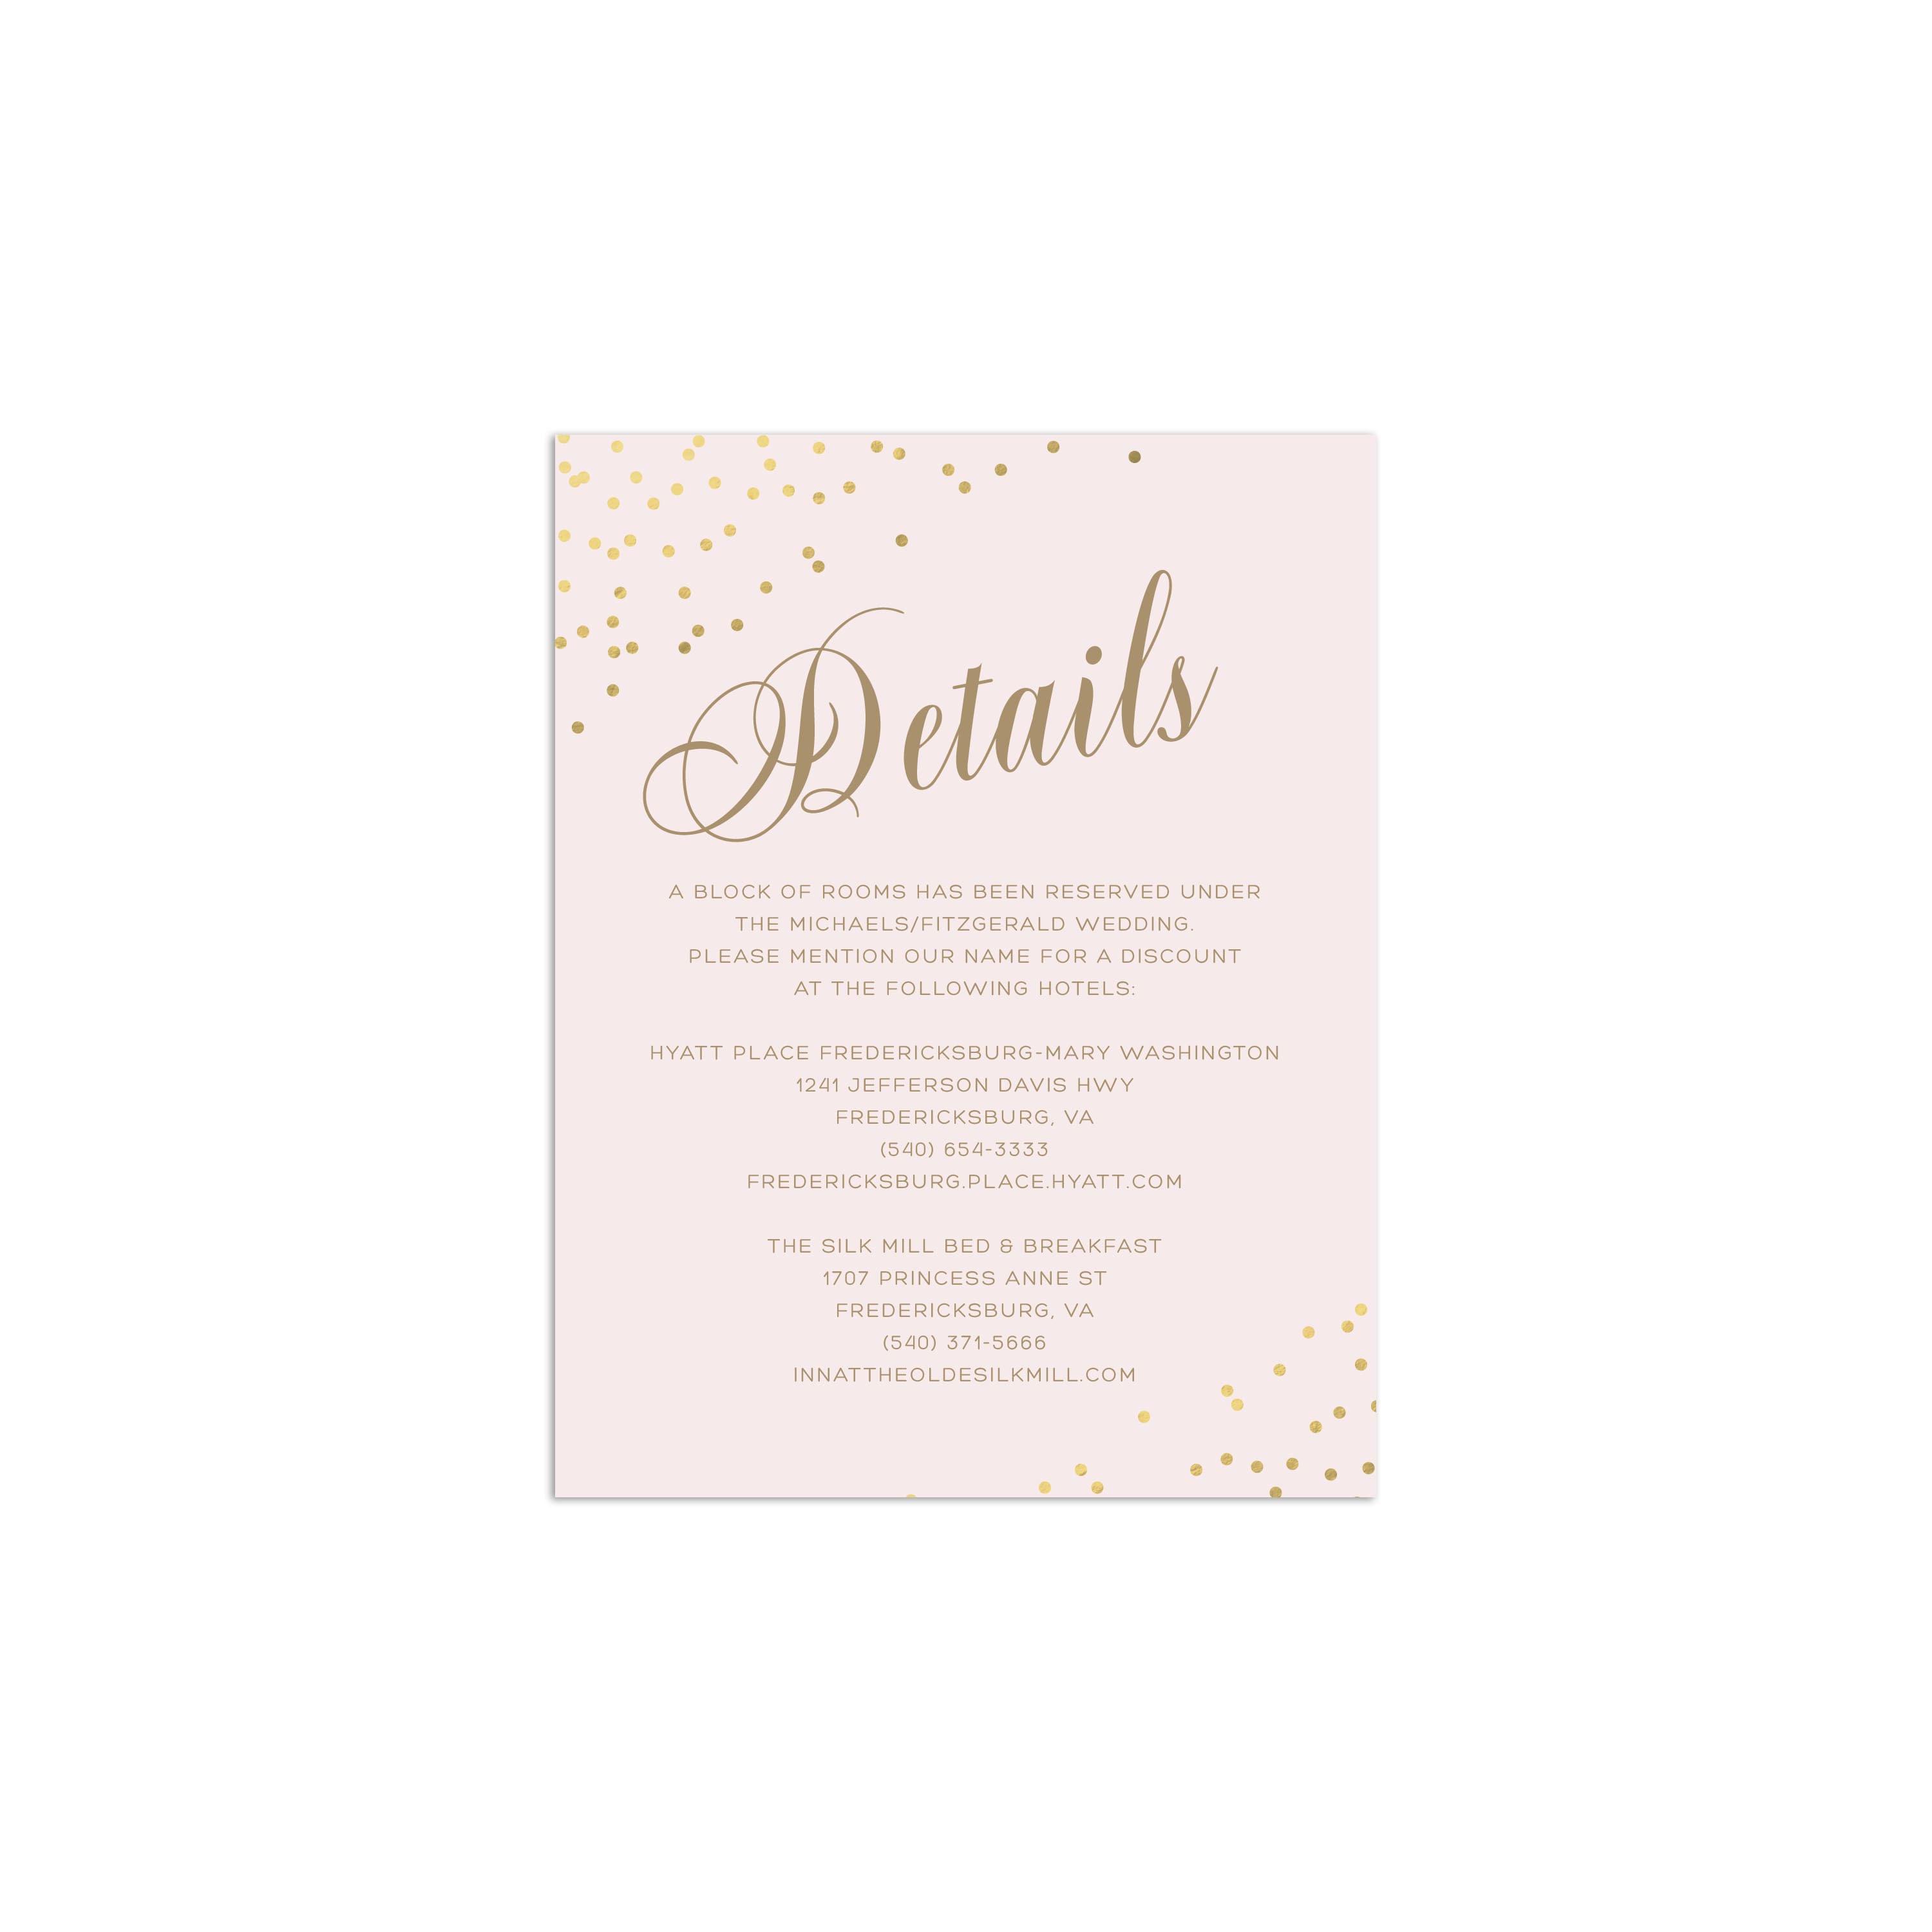 Michaels wedding invitations templates